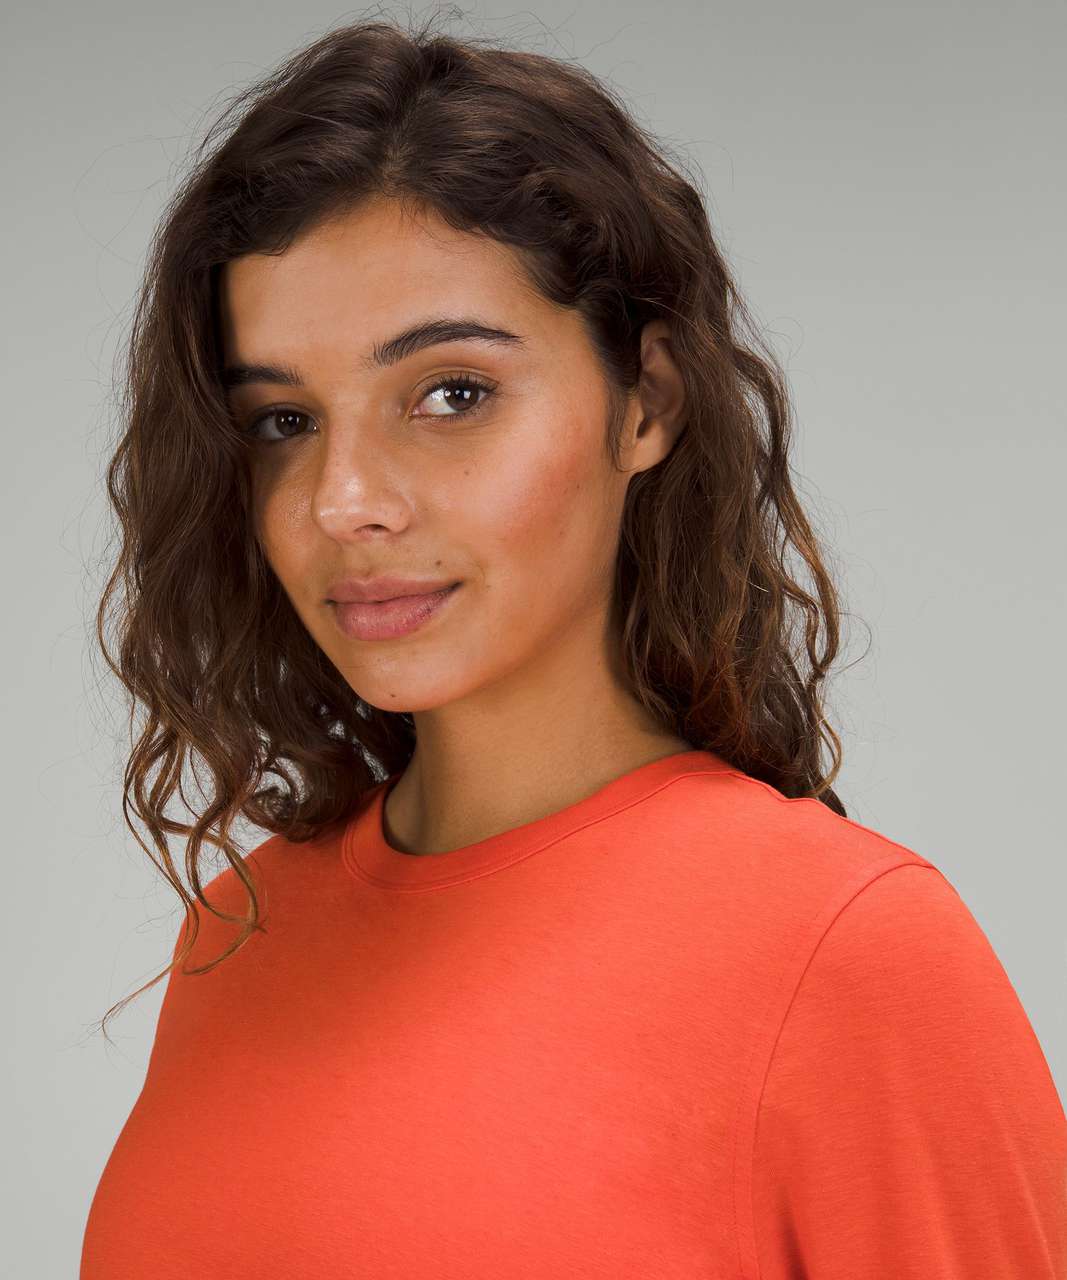 Lululemon Classic-Fit Cotton-Blend Long-Sleeve Shirt - Solar Orange